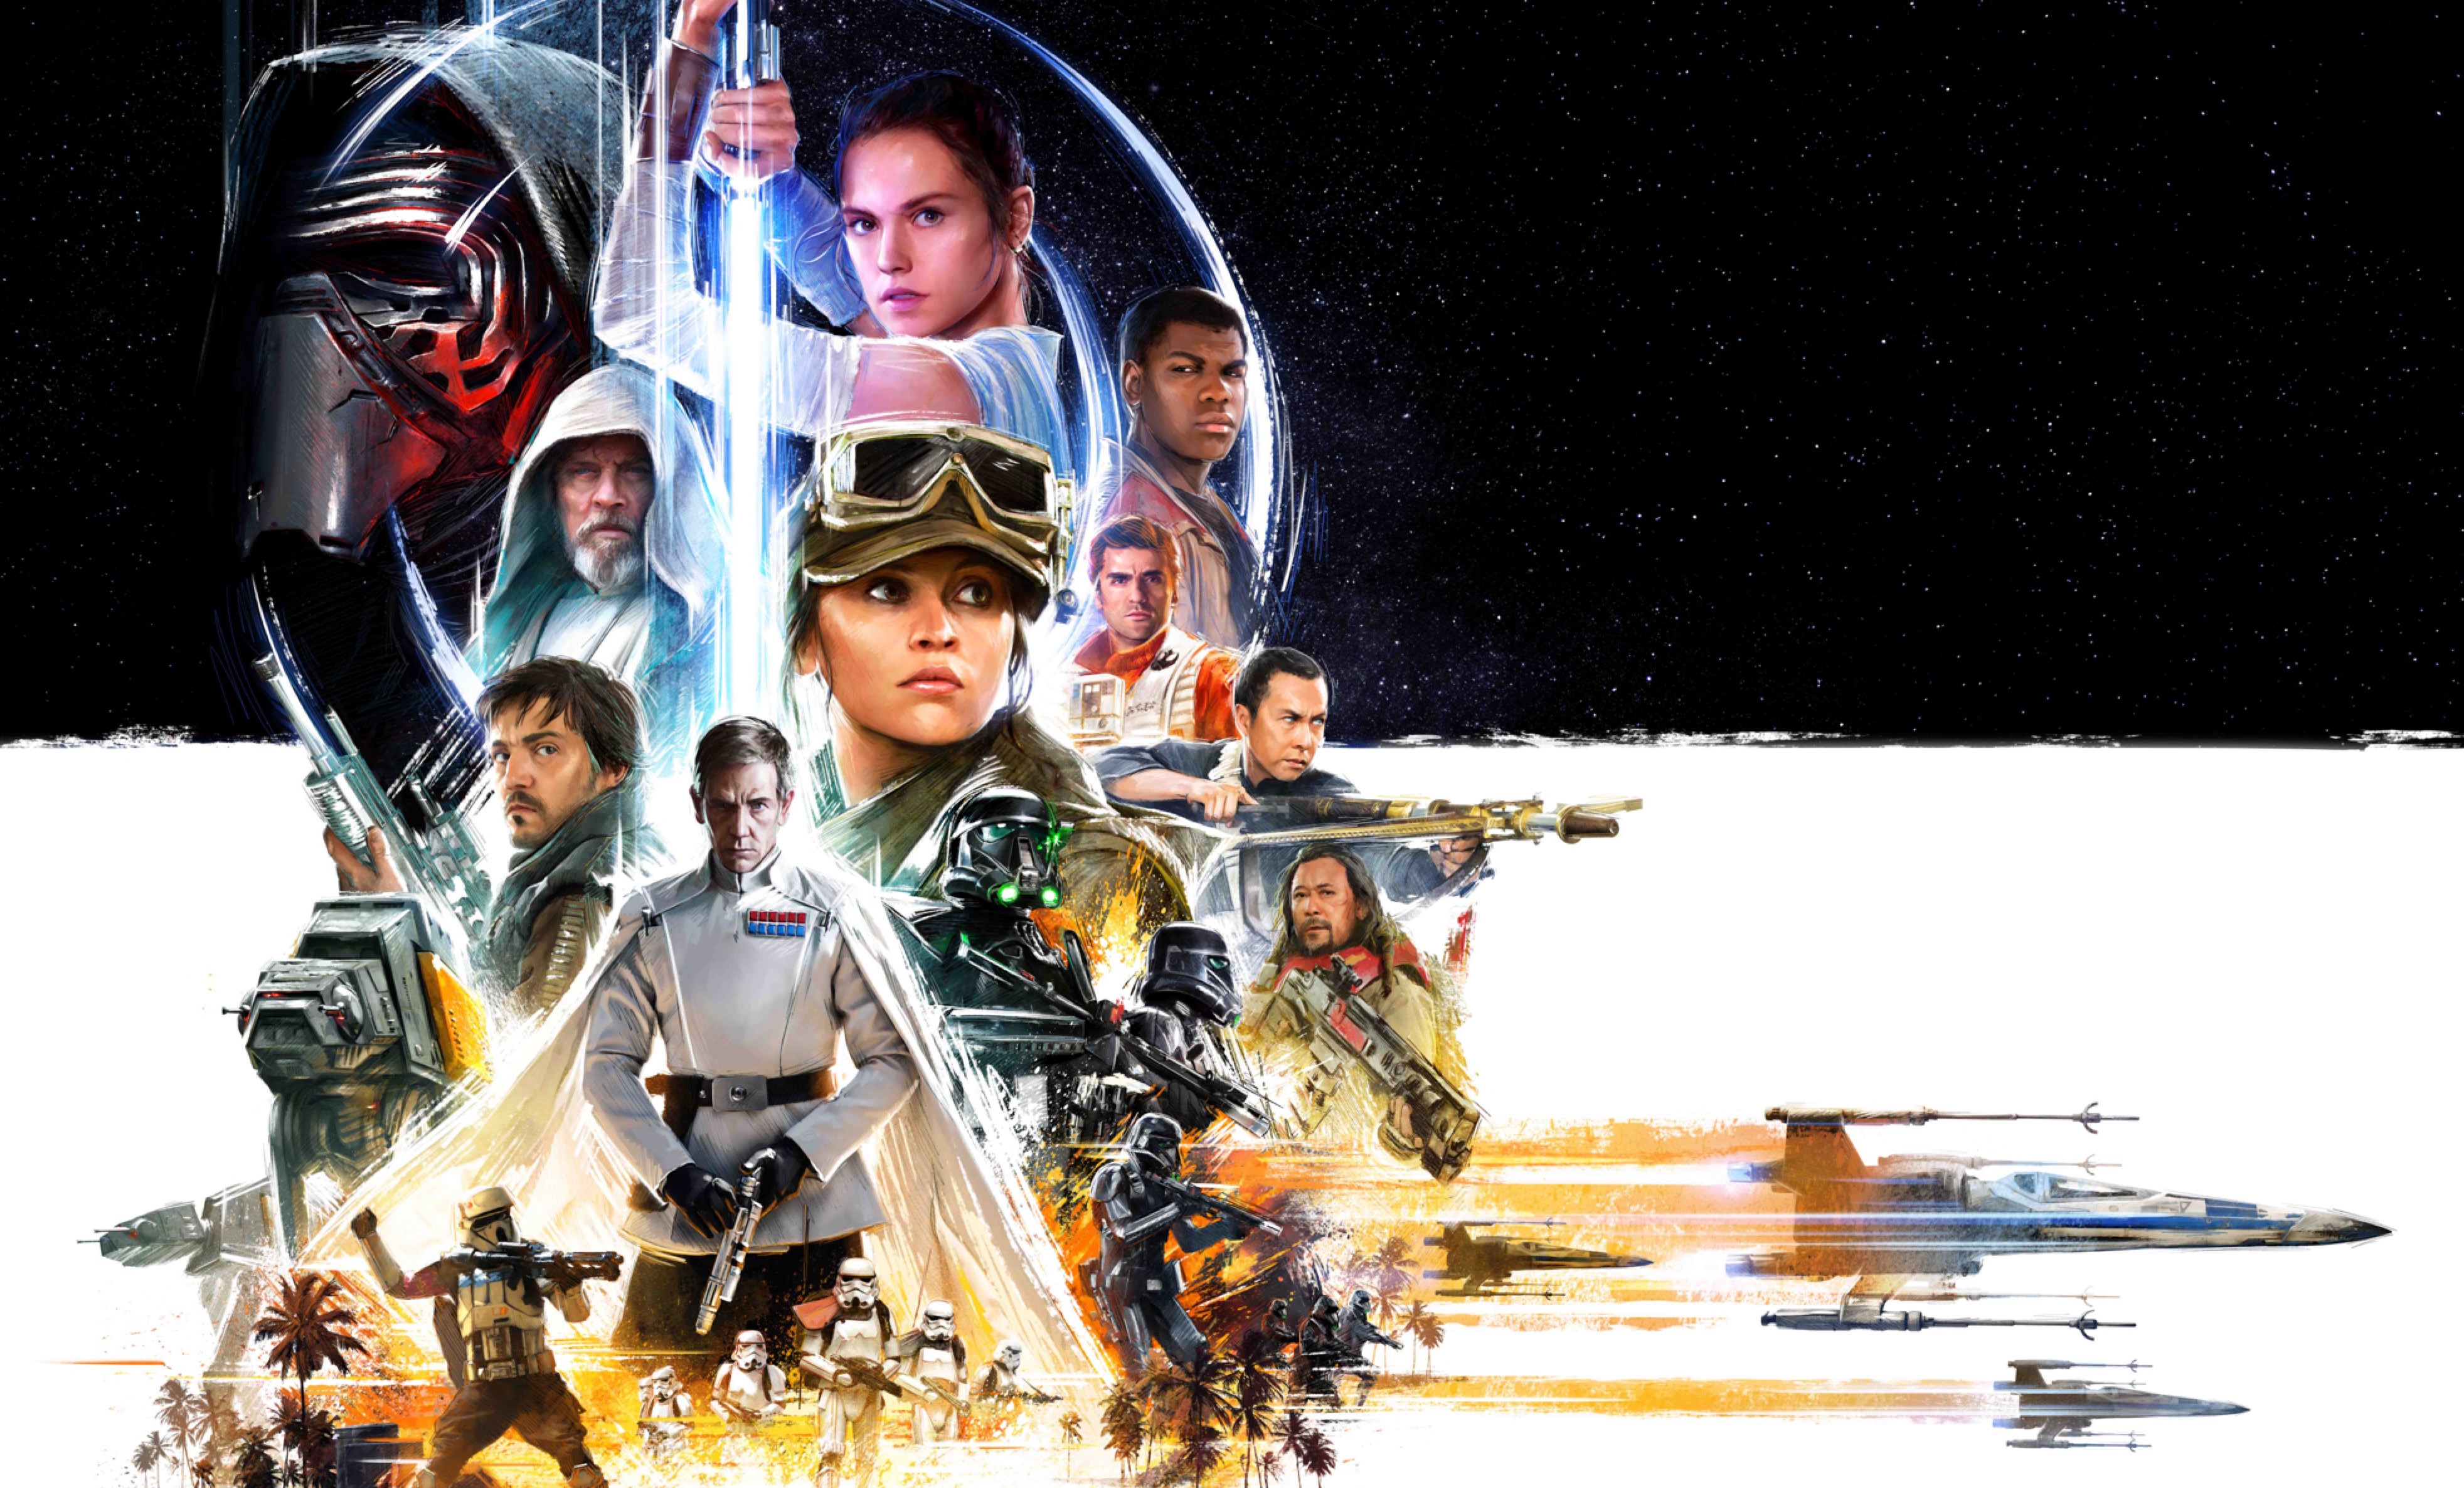 Watch Movie Rogue One Star Wars Online 2016 Full HD